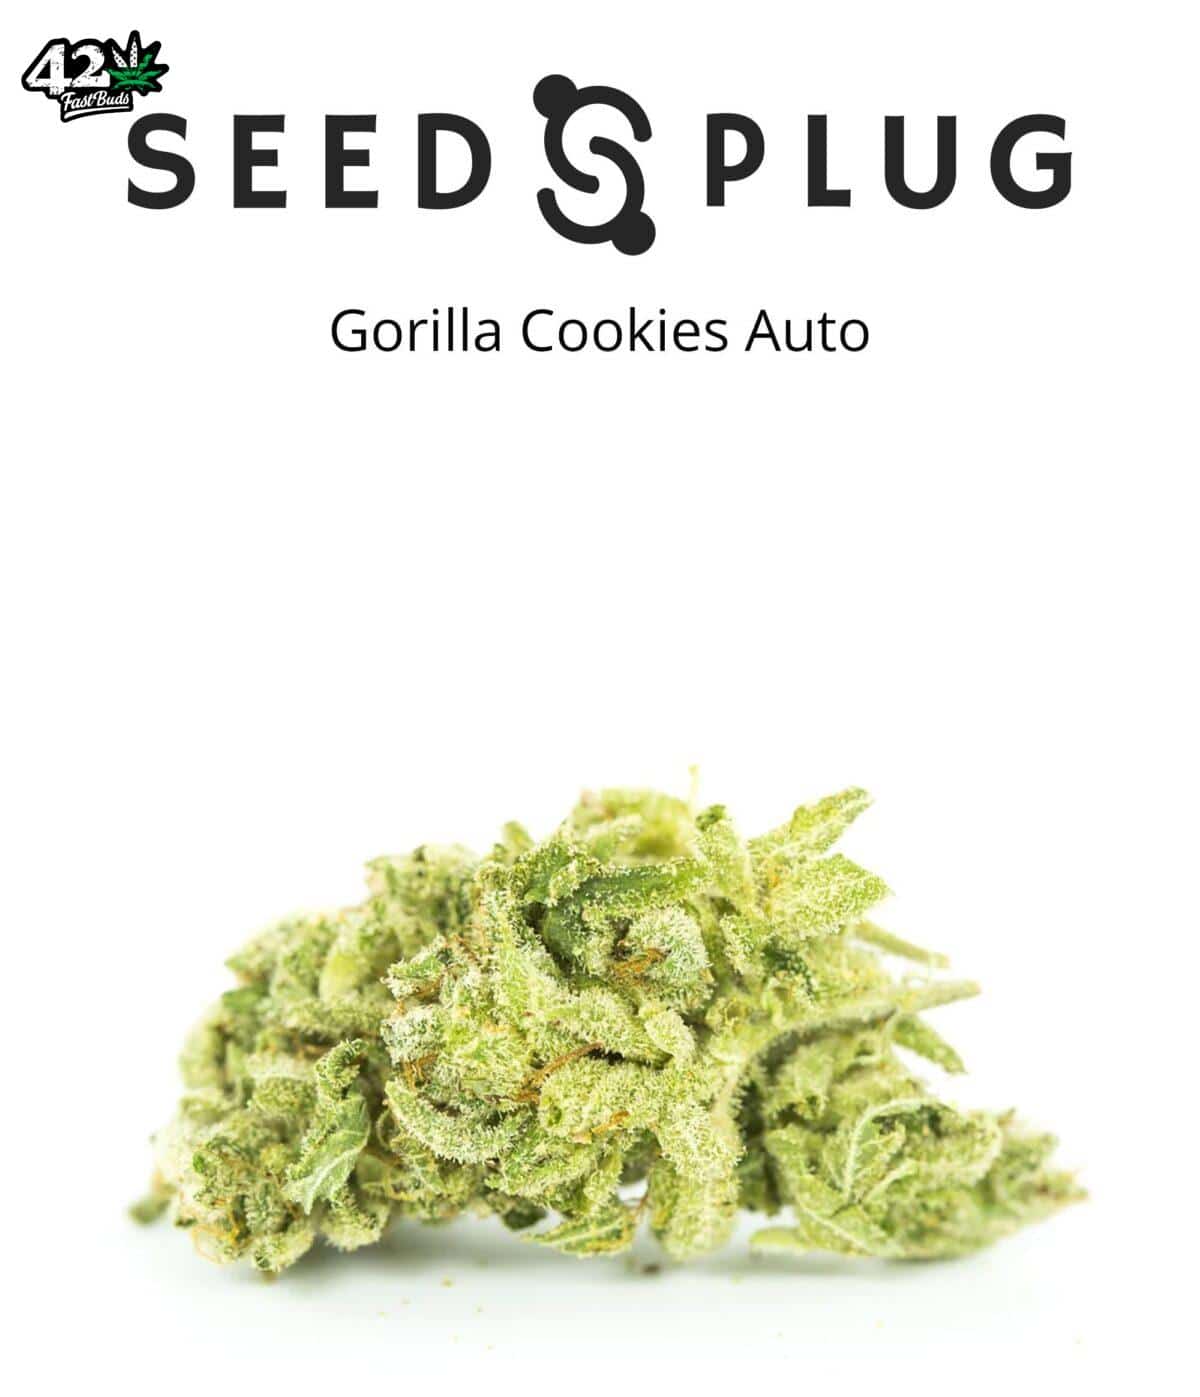 Gorilla Cookies Auto by Fast Buds - SeedsPlug